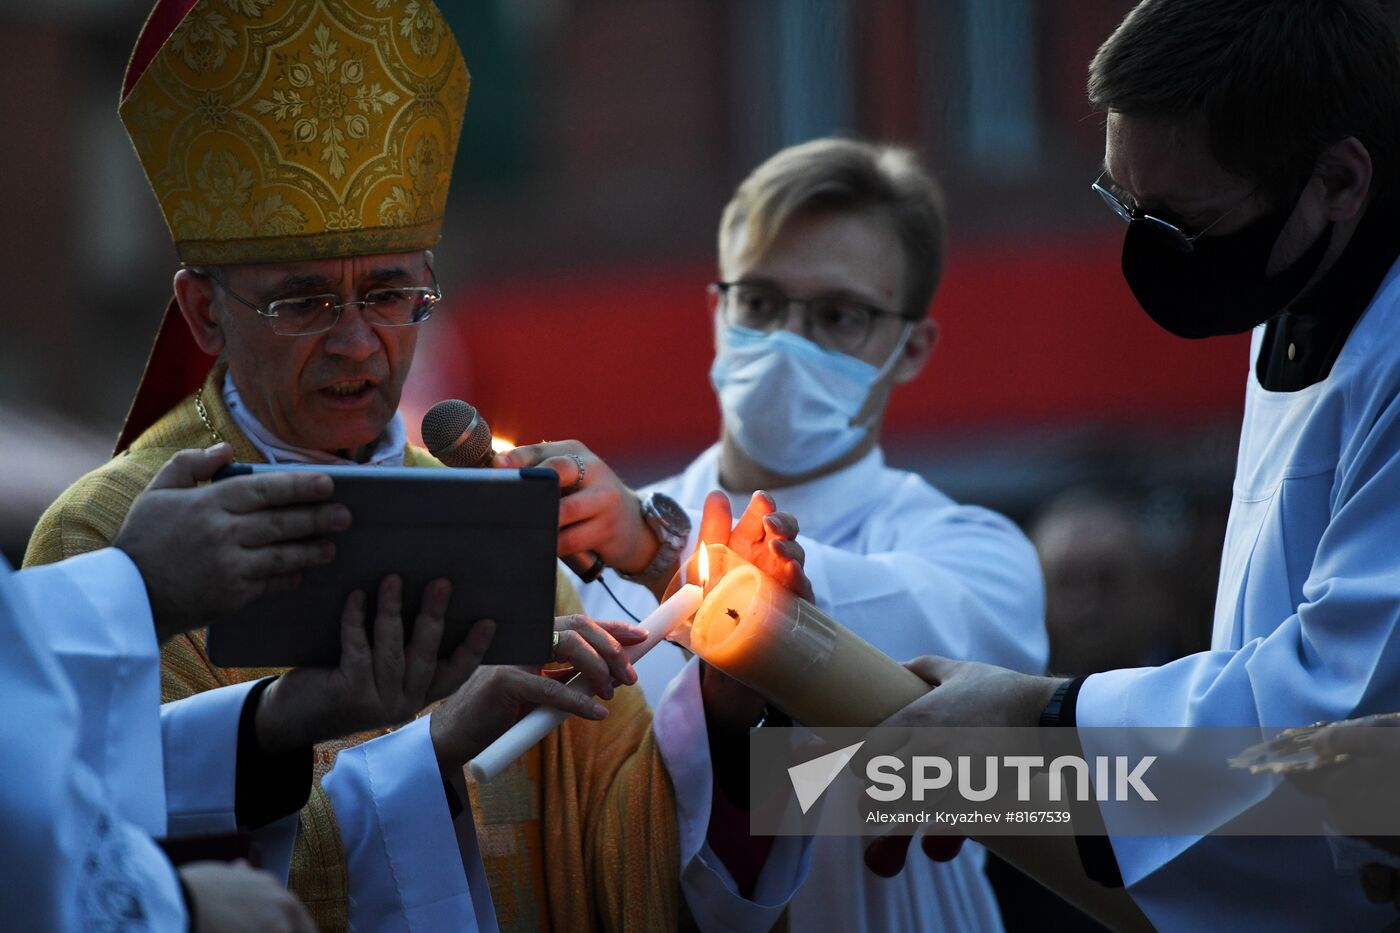 Russia Catholic Easter